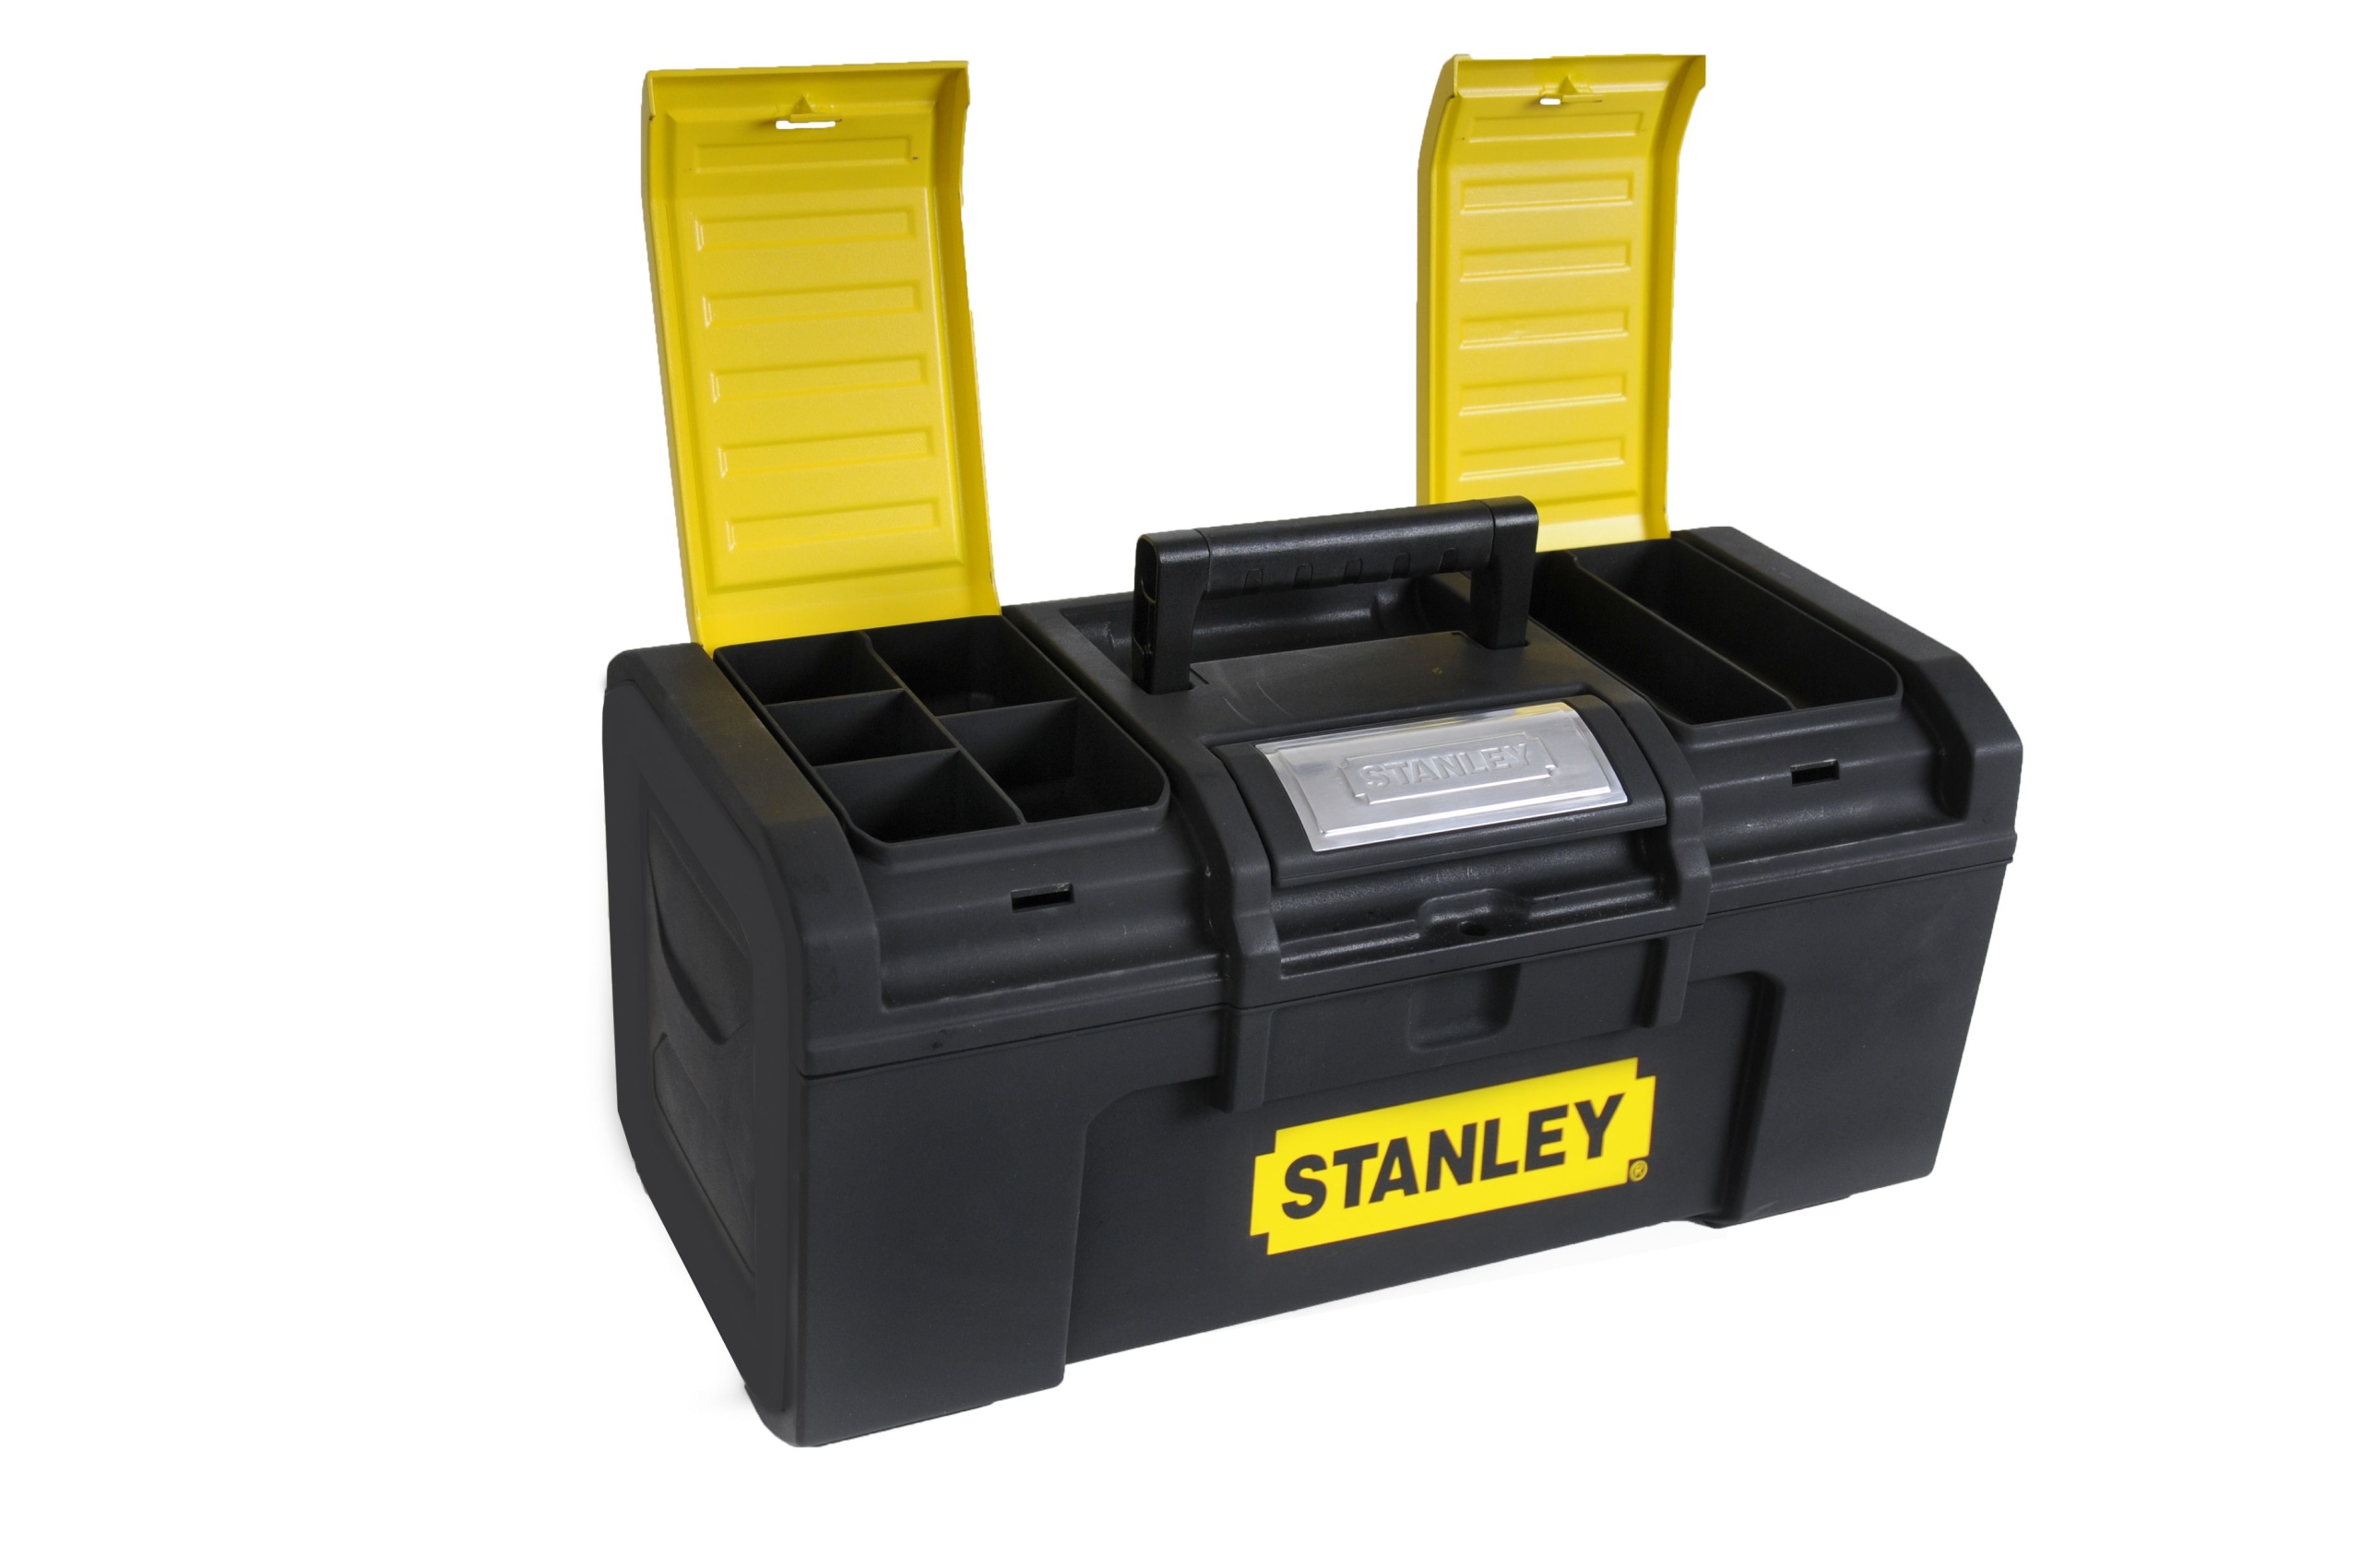 Toolbox 1.1. Ящик для инструмента Stanley line Toolbox 16" 1-79-216 [1-79-216]. Ящик для инструмента Stanley Basic Toolbox 1-79-218. Ящик для инструментов Stanley 1-79-216. Ящик для инструмента Stanley Basic Toolbox 24.